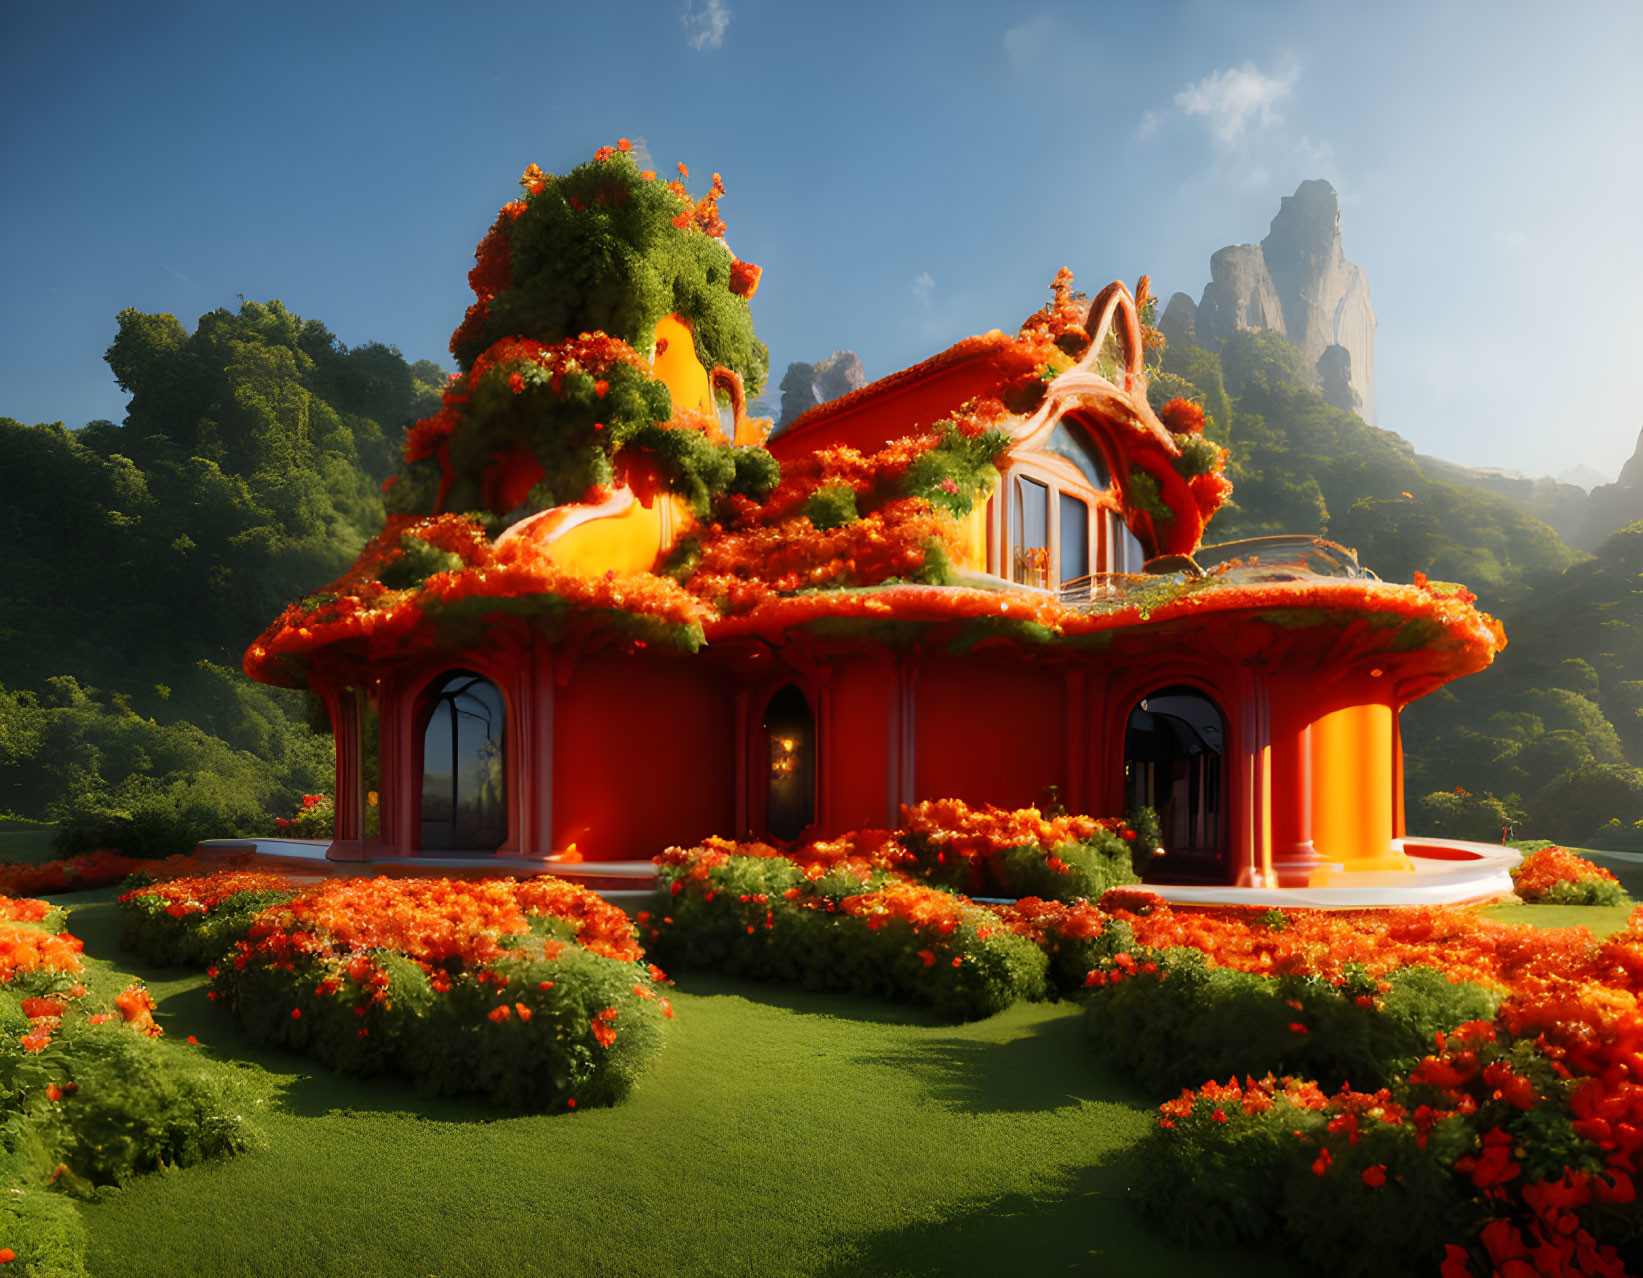  A orange fruit house